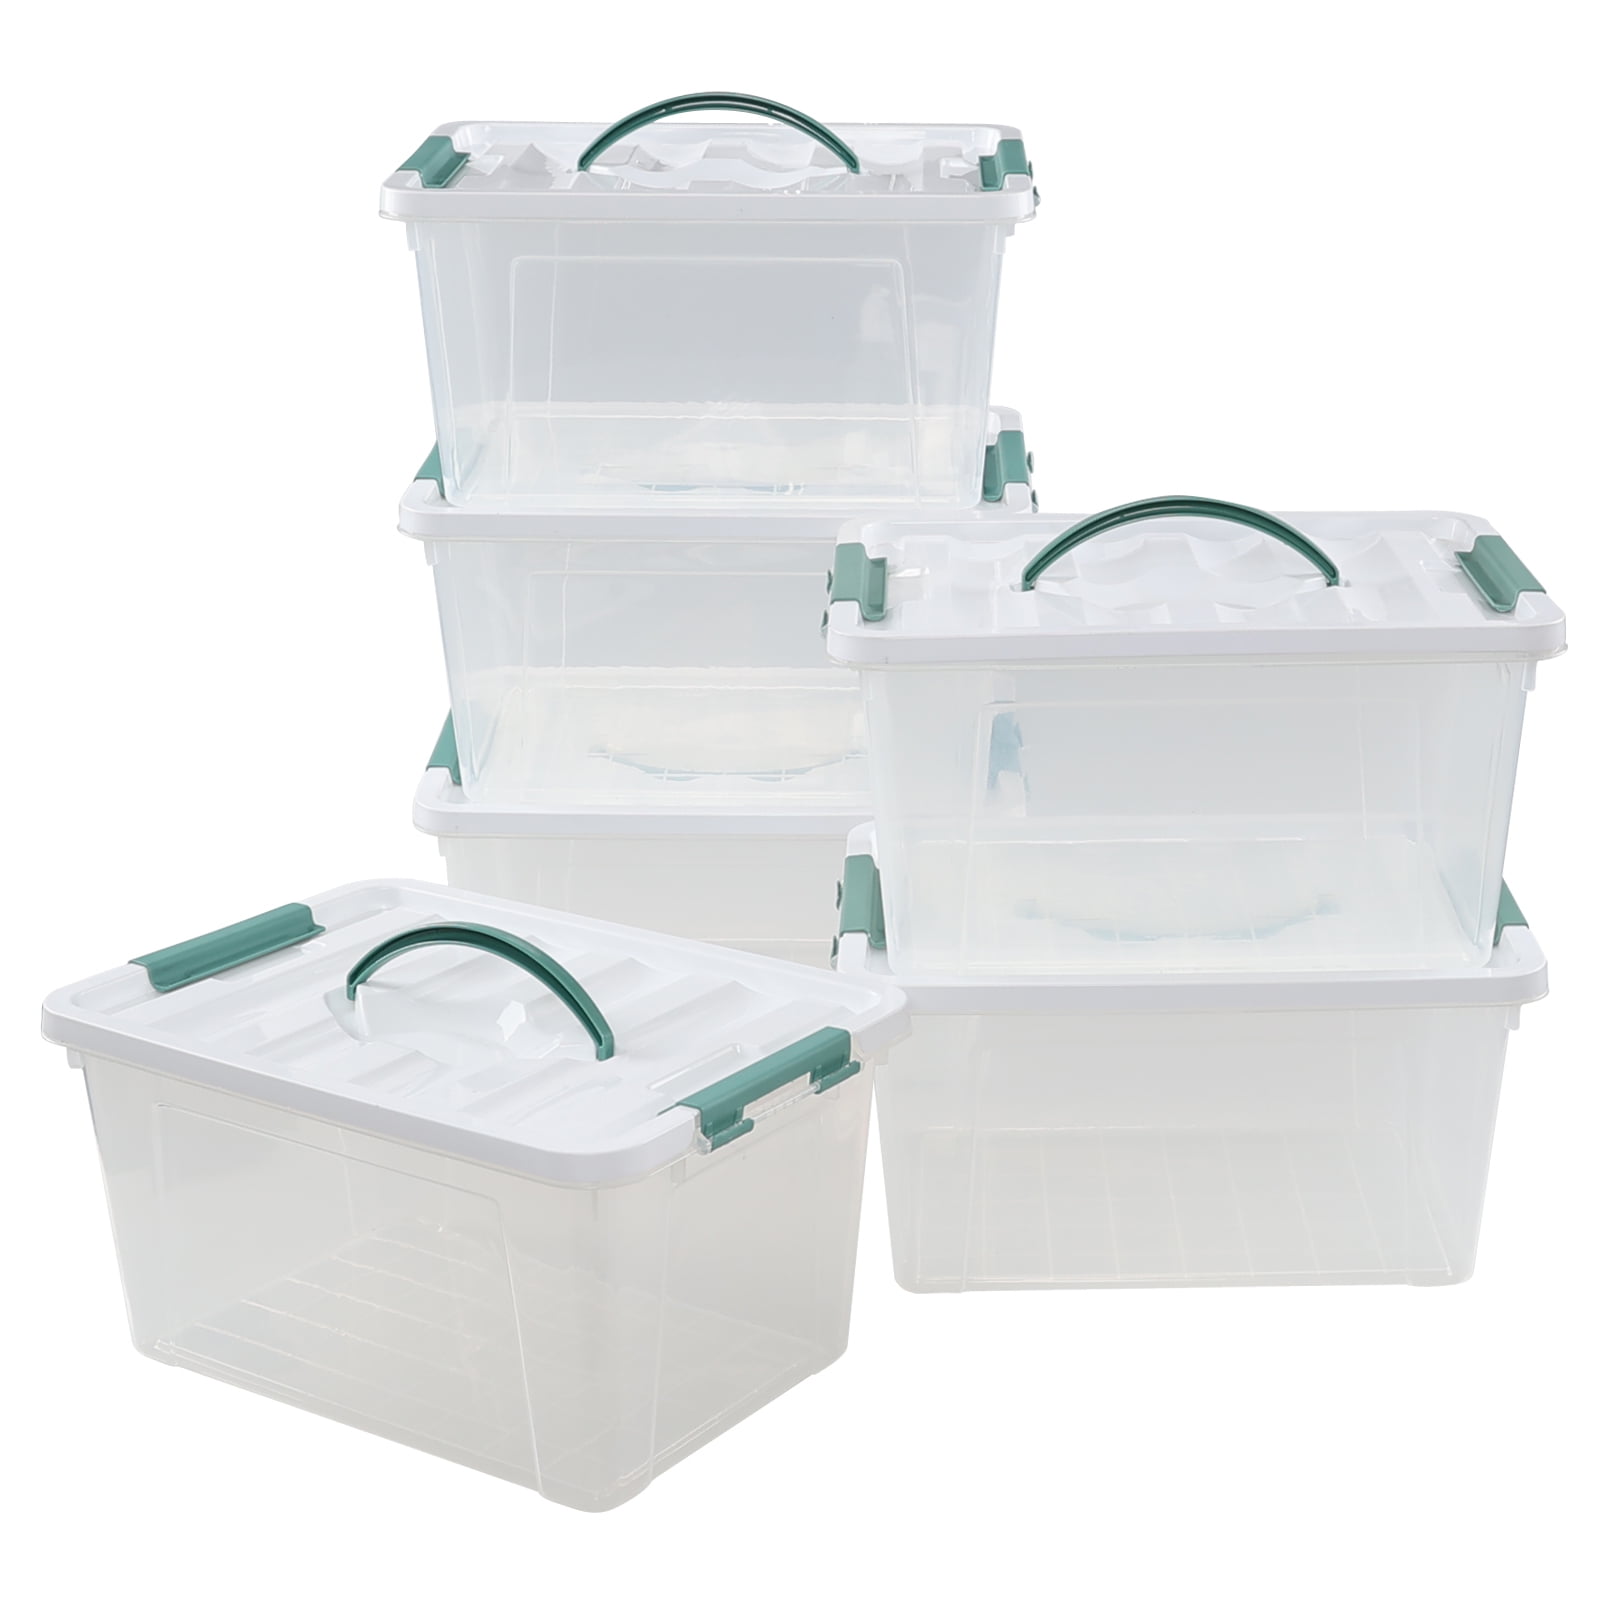  Jekiyo Clear Plastic Storage Bin, 14 Quart Latching Box  Container with Lid, 4 Packs